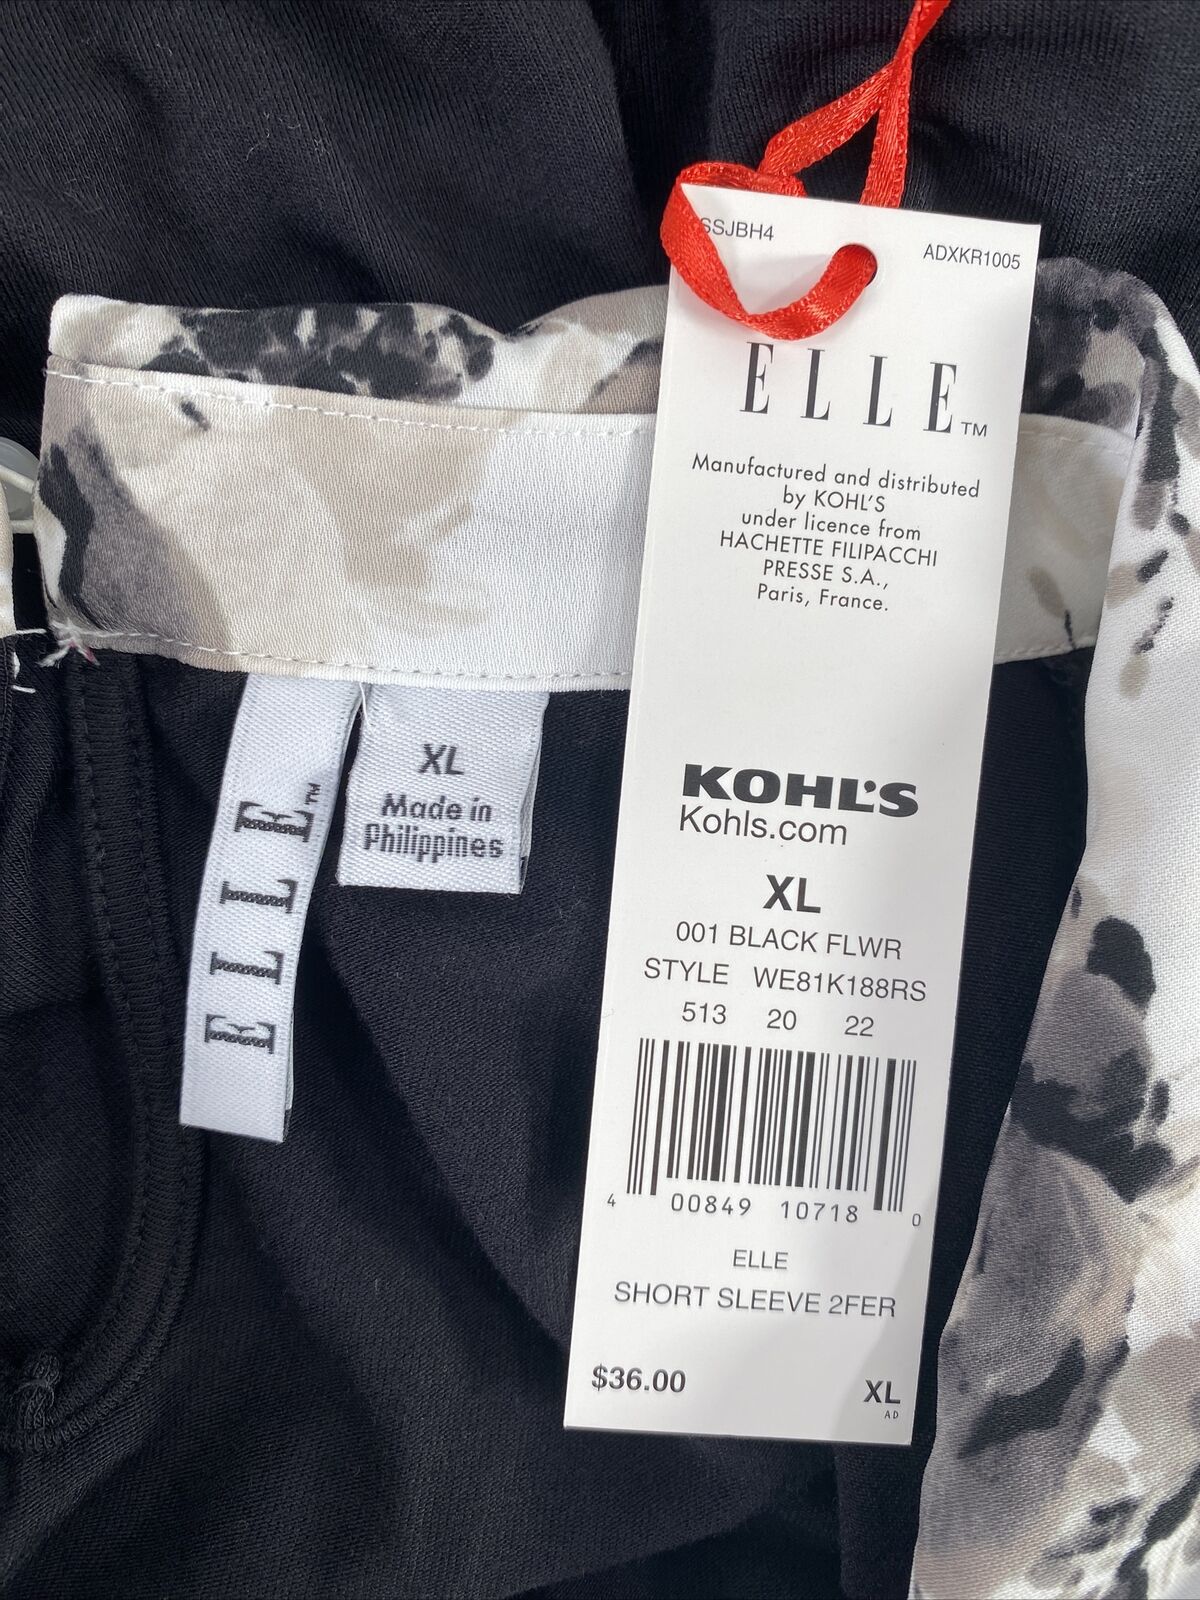 NEW Elle Women's Black Floral Short Sleeve Collared Blouse - XL